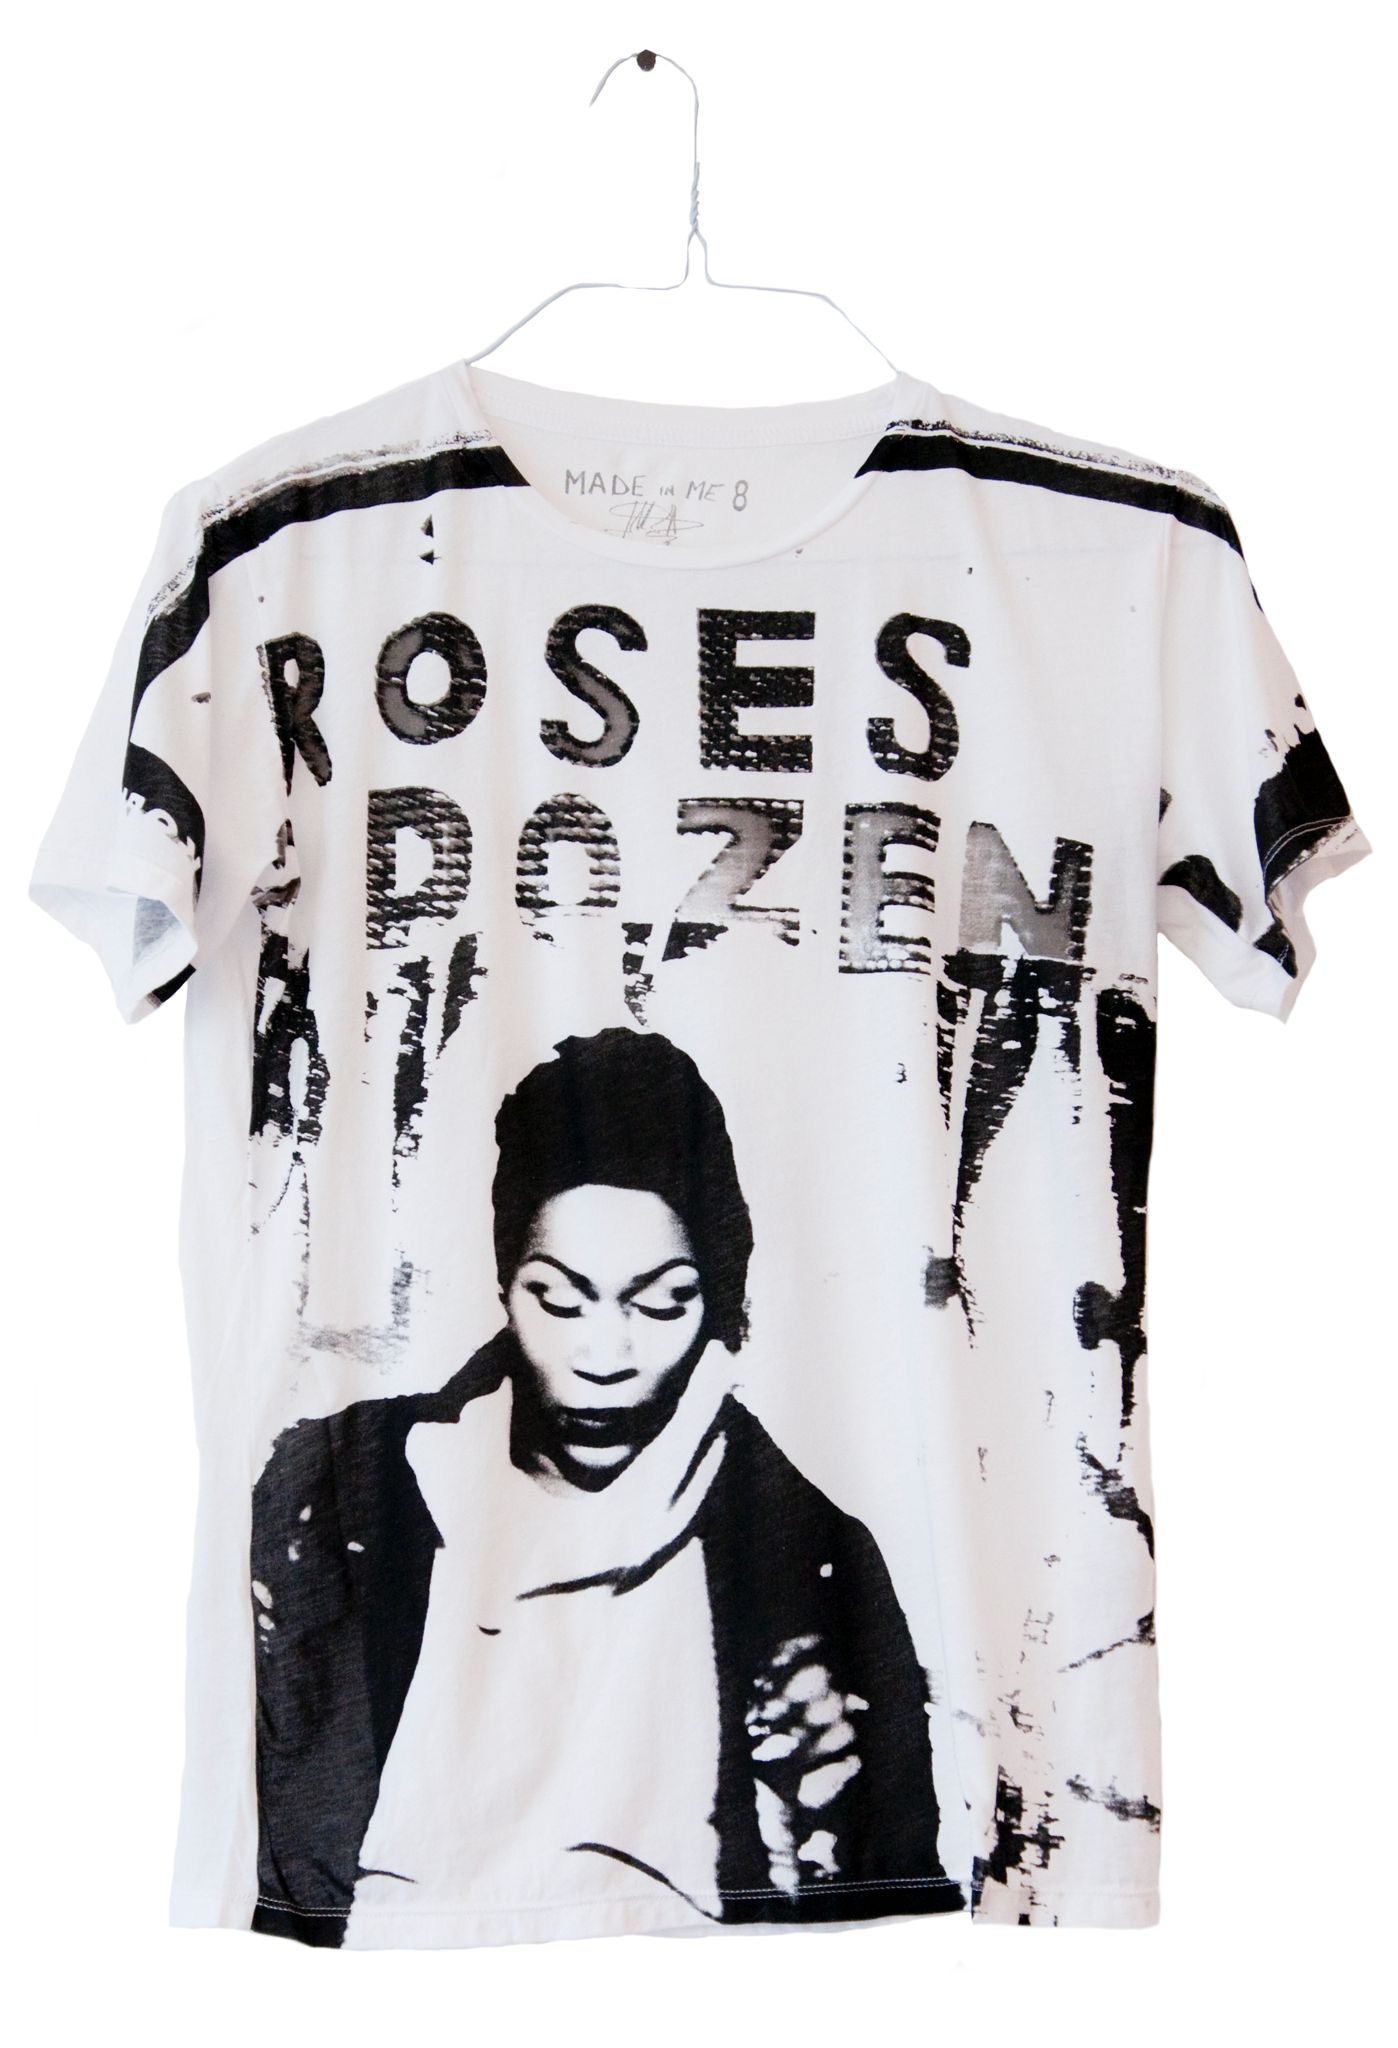 T-Shirt by Francesca Galliani Dozen Roses madeinme8.nyc